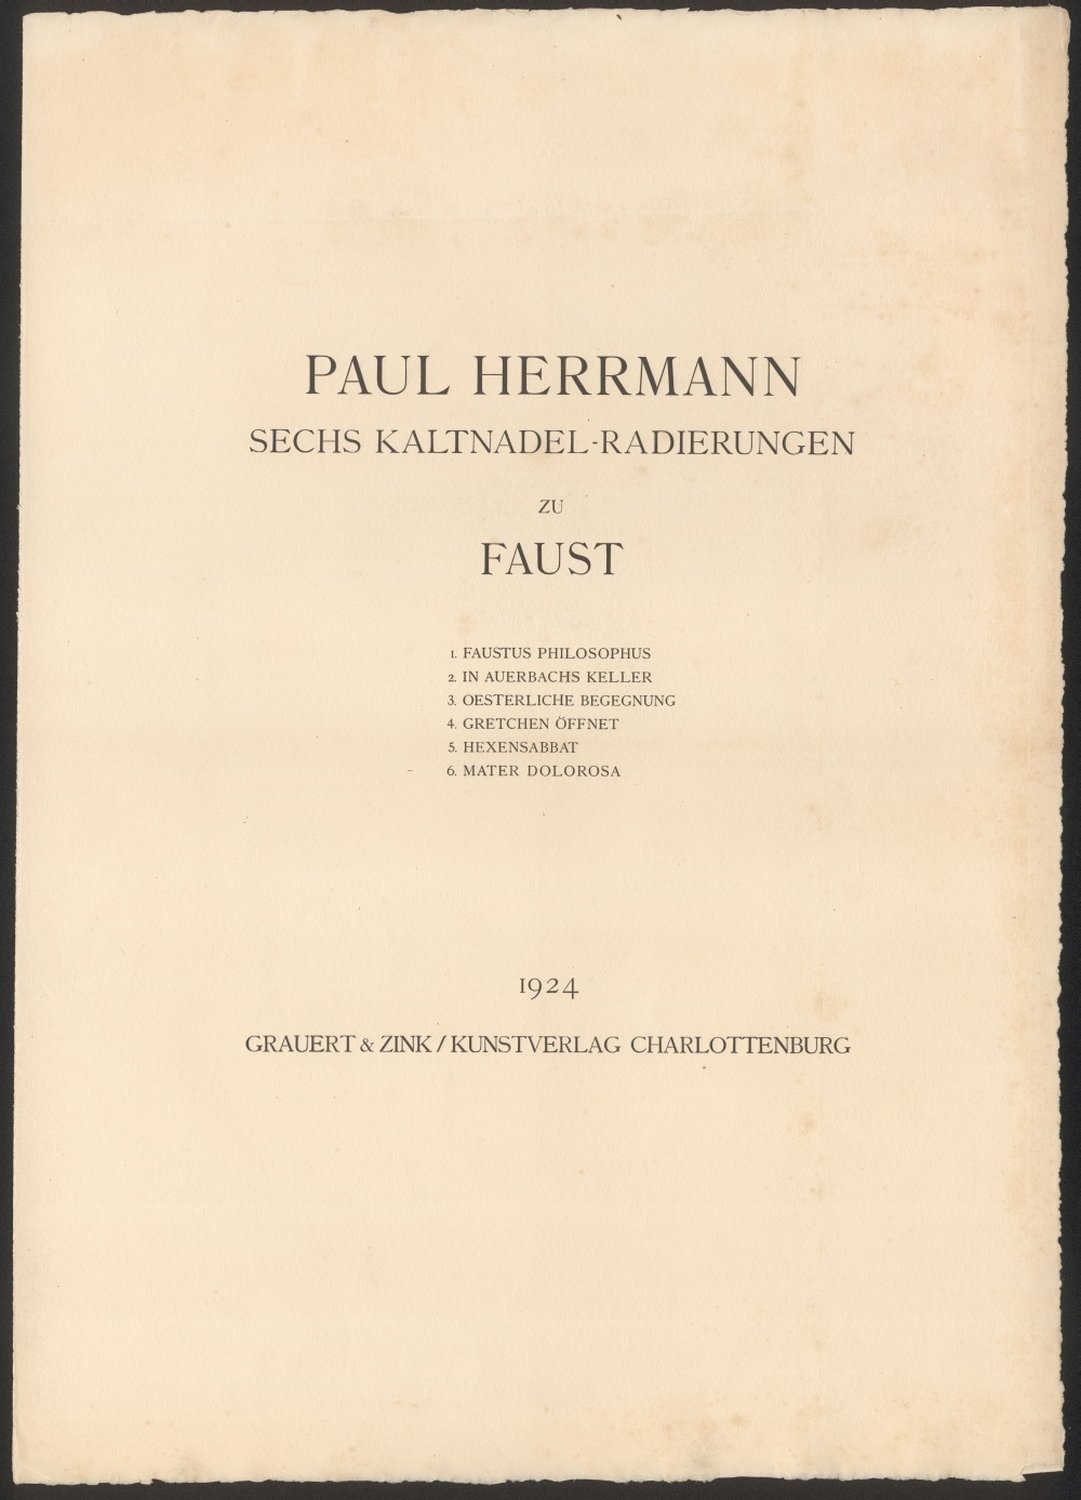 Sechs Kaltnadel-Radierungen zu Faust (Freies Deutsches Hochstift / Frankfurter Goethe-Museum CC BY-NC-SA)